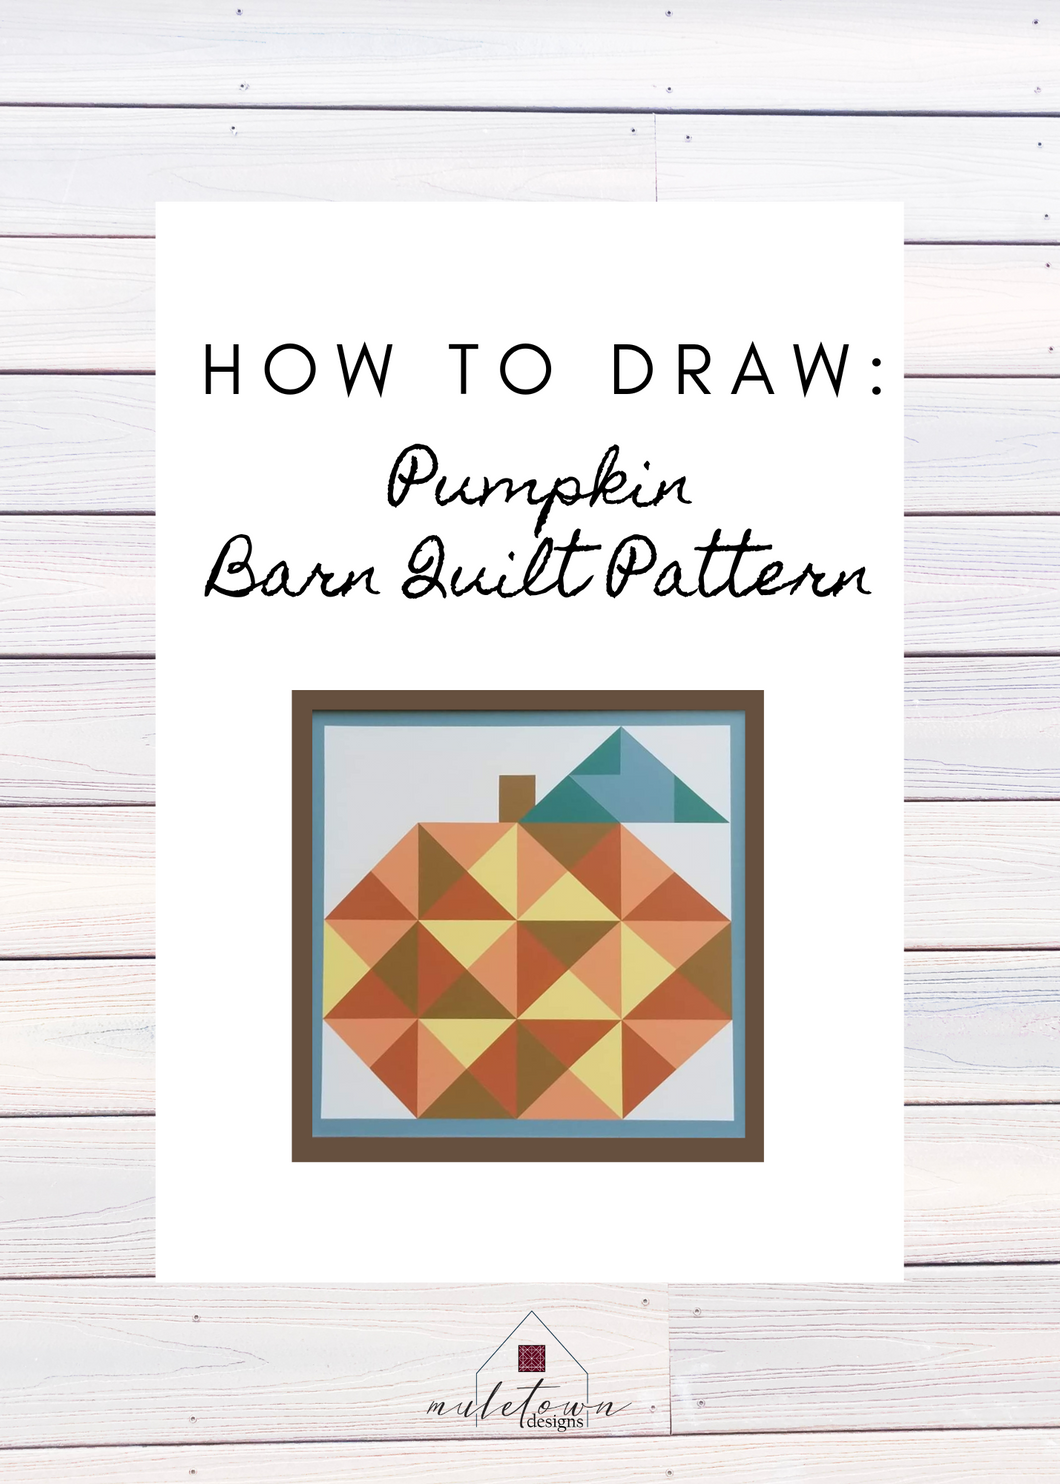 Pumpkin Pattern Instructions - DIGITAL DOWNLOAD